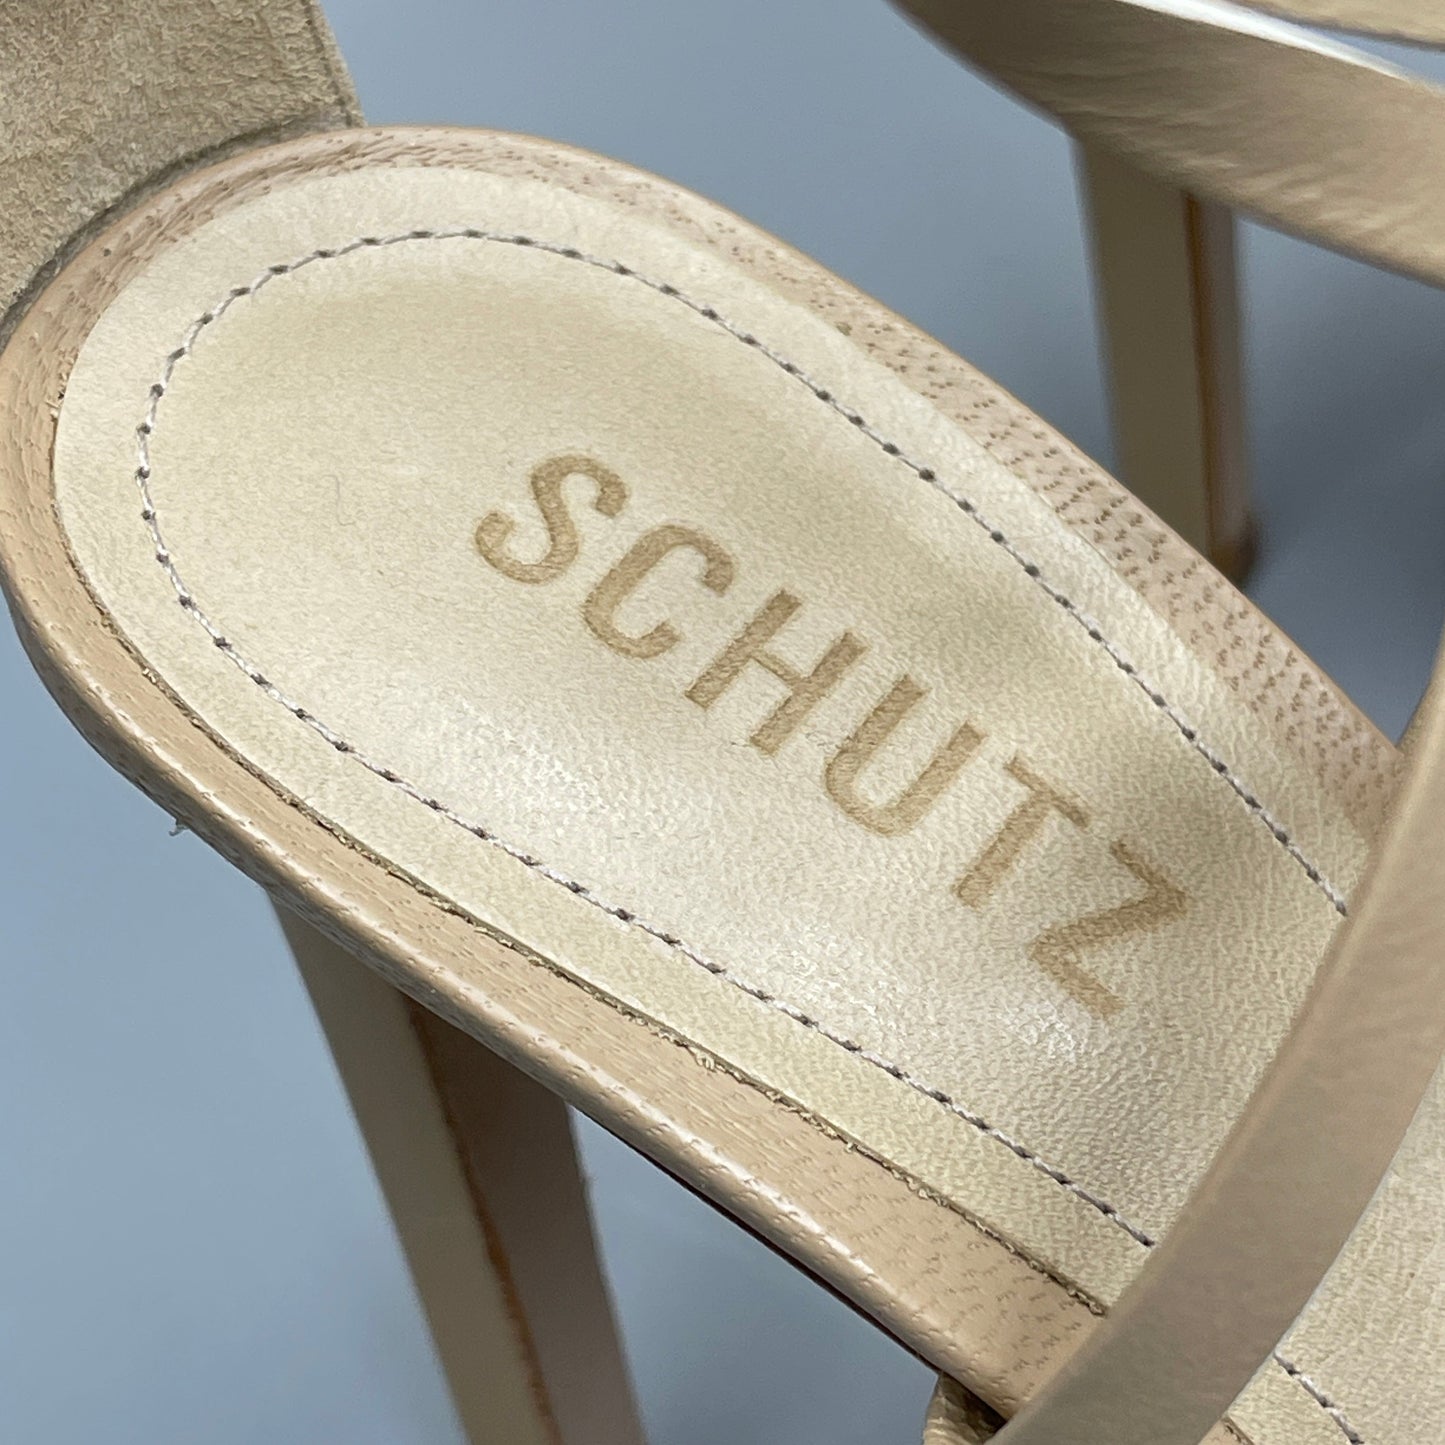 SCHUTZ Bryce Ankle Tie Women's Leather High Heel Strappy Sandal Light Nude Sz 5B (New)